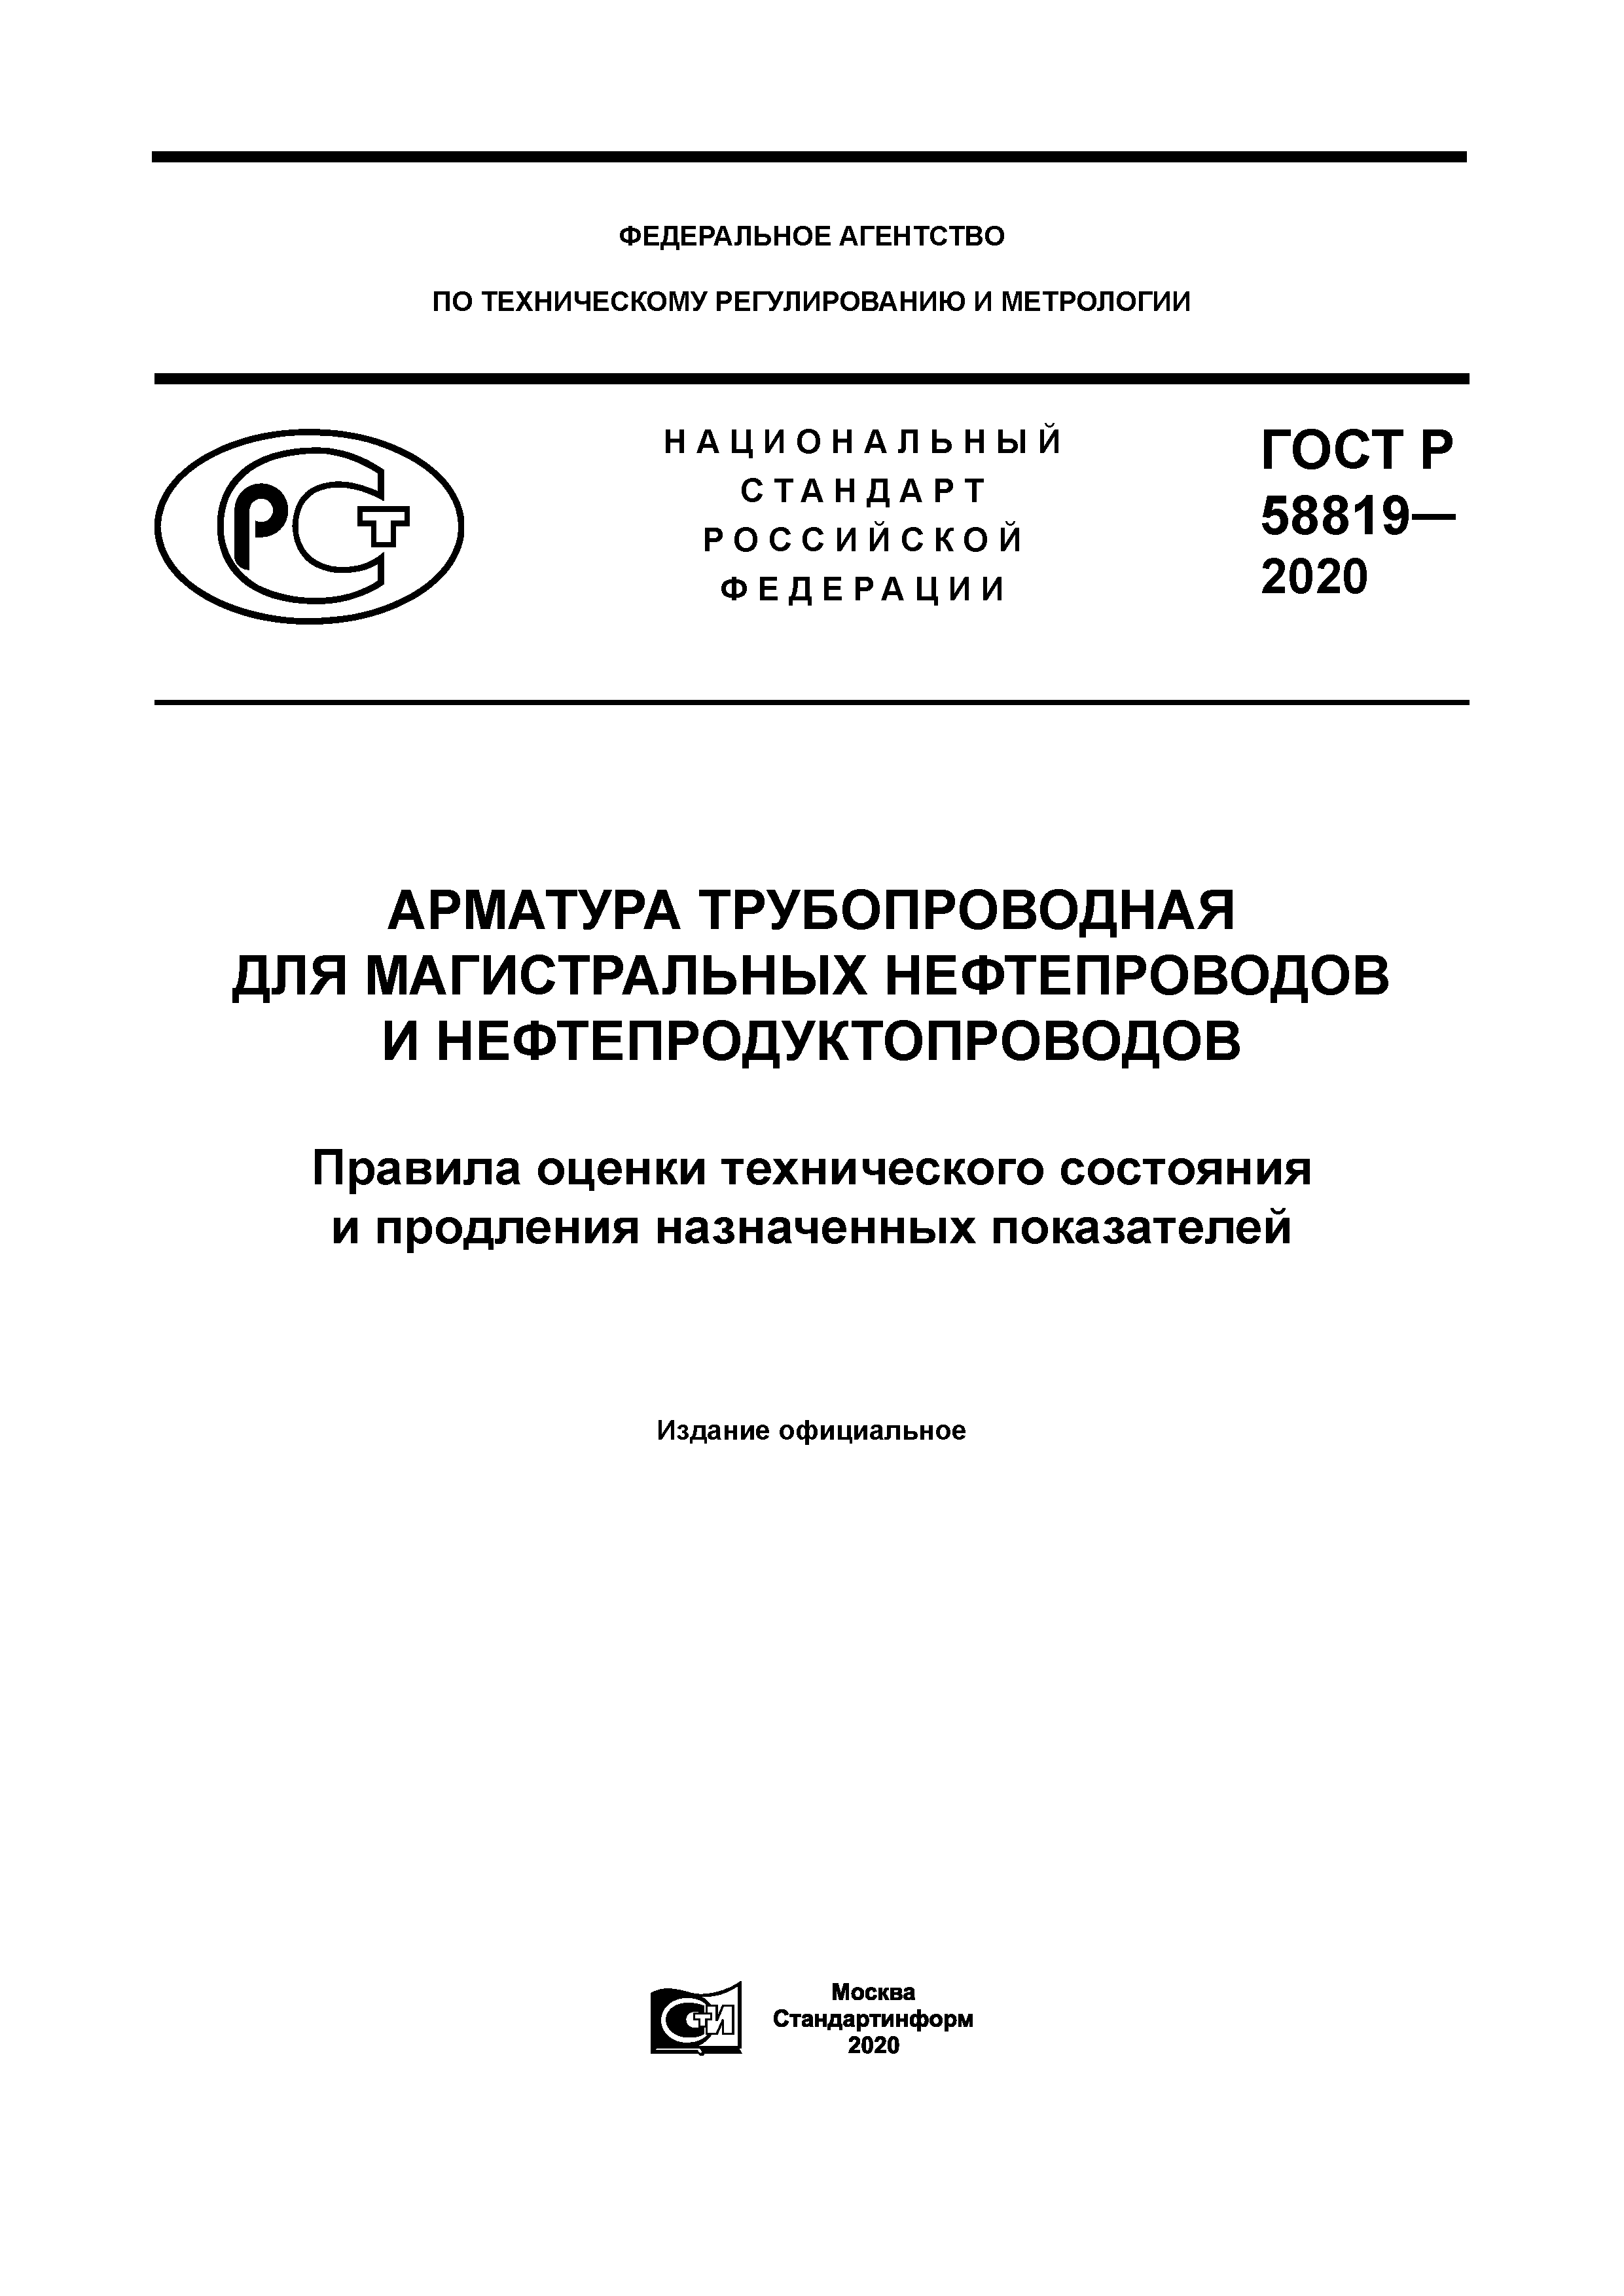 ГОСТ Р 58819-2020